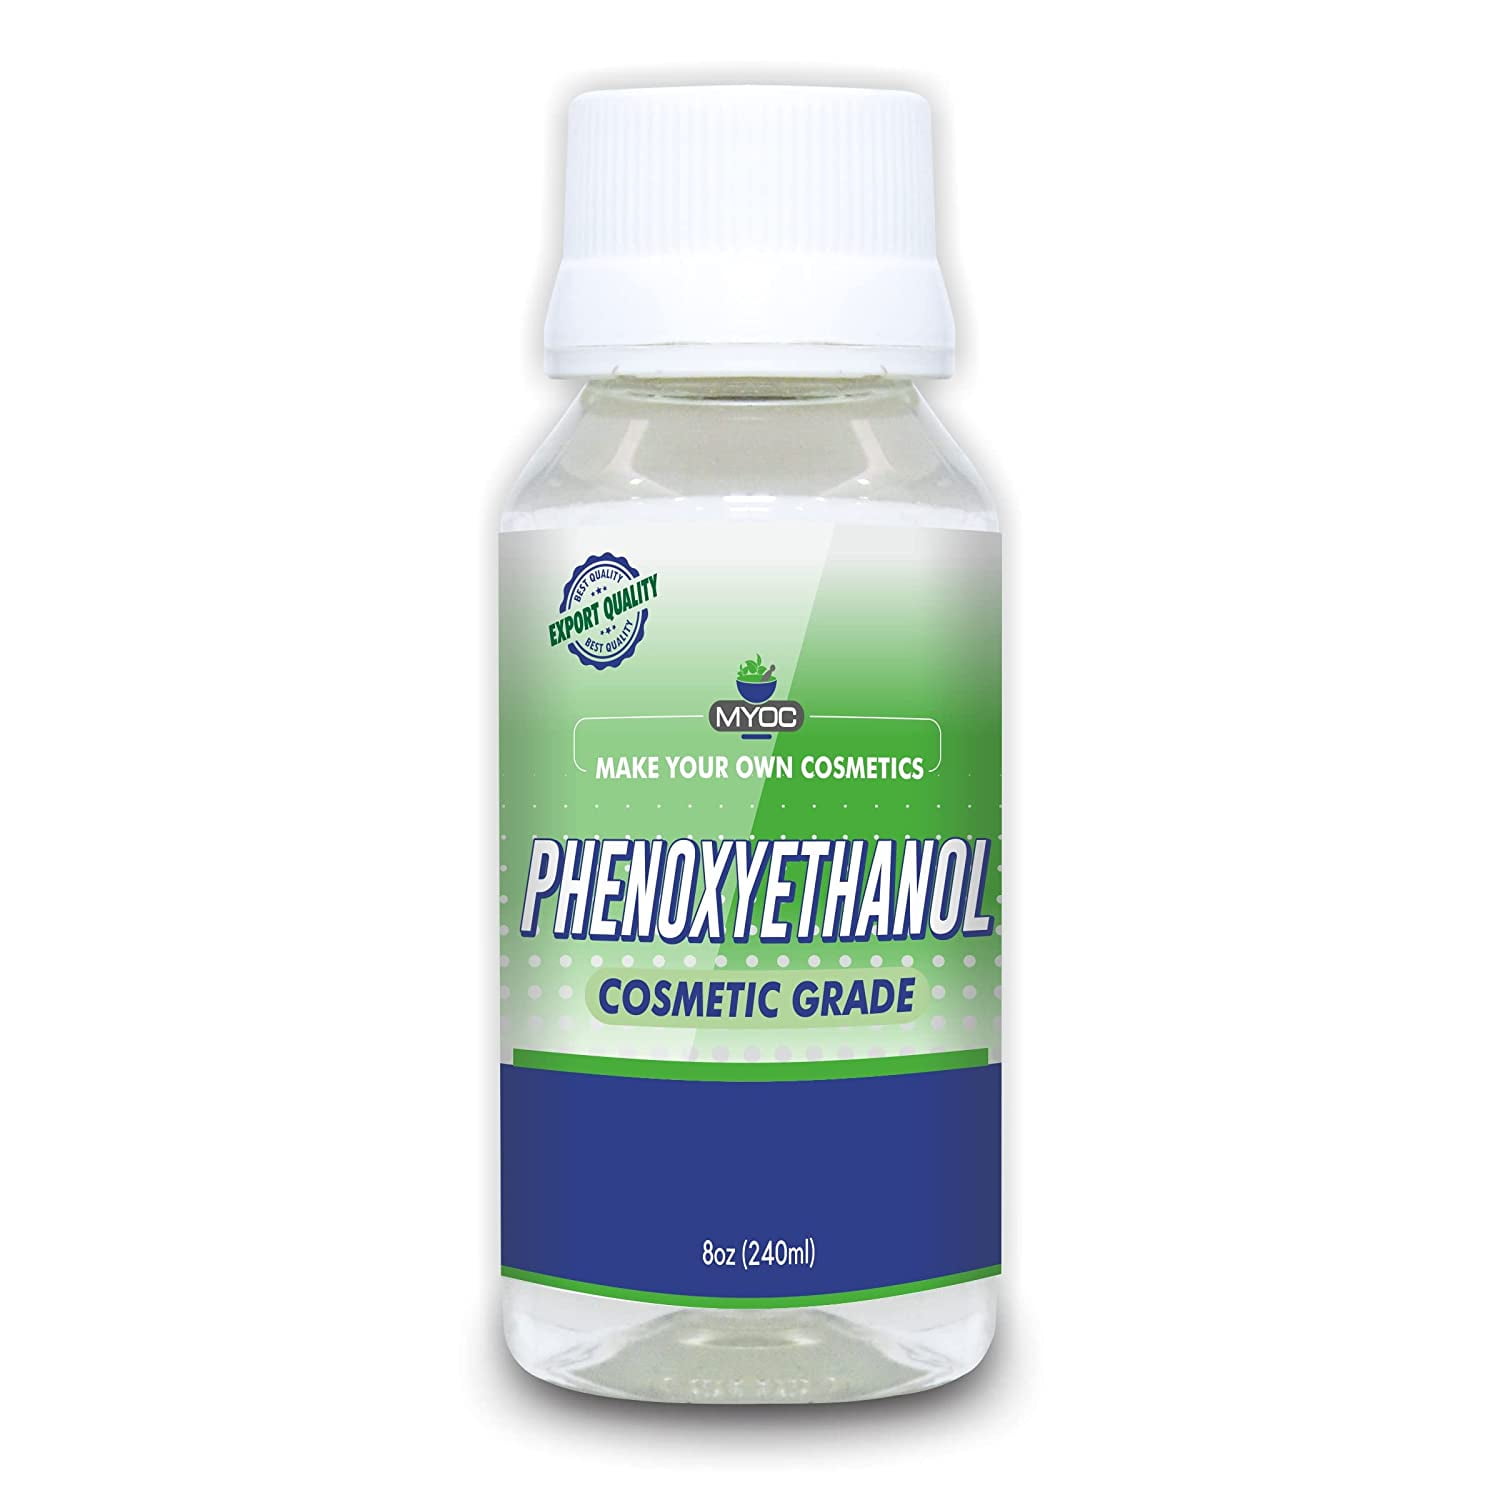 Phenoxyethanol + CG - Optiphen - Preservative against mold